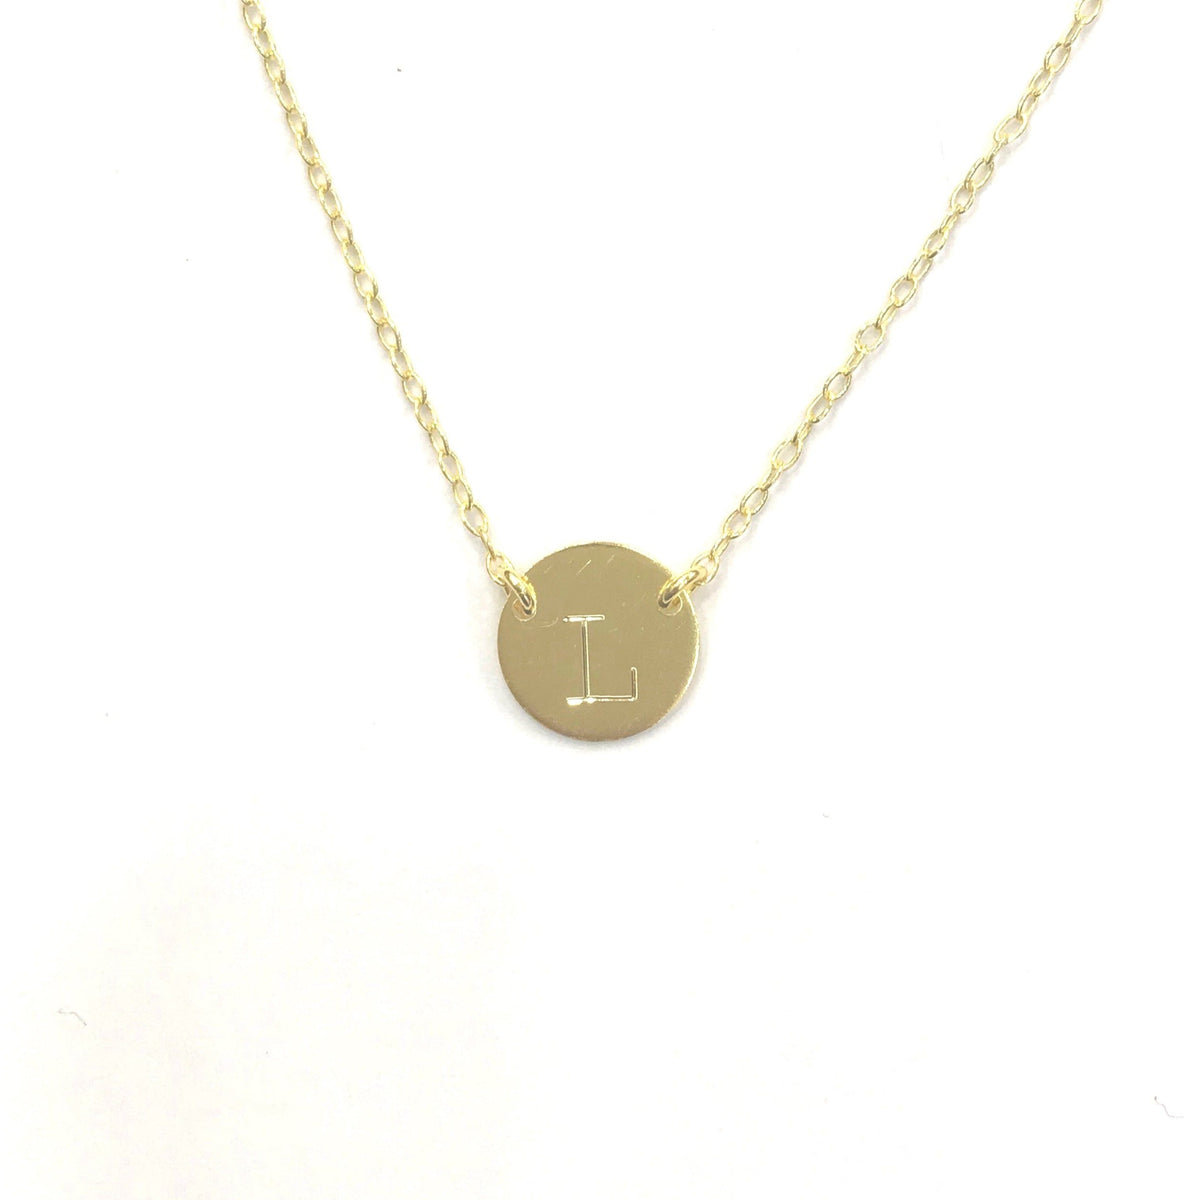 Floren Necklace - Solid Gold